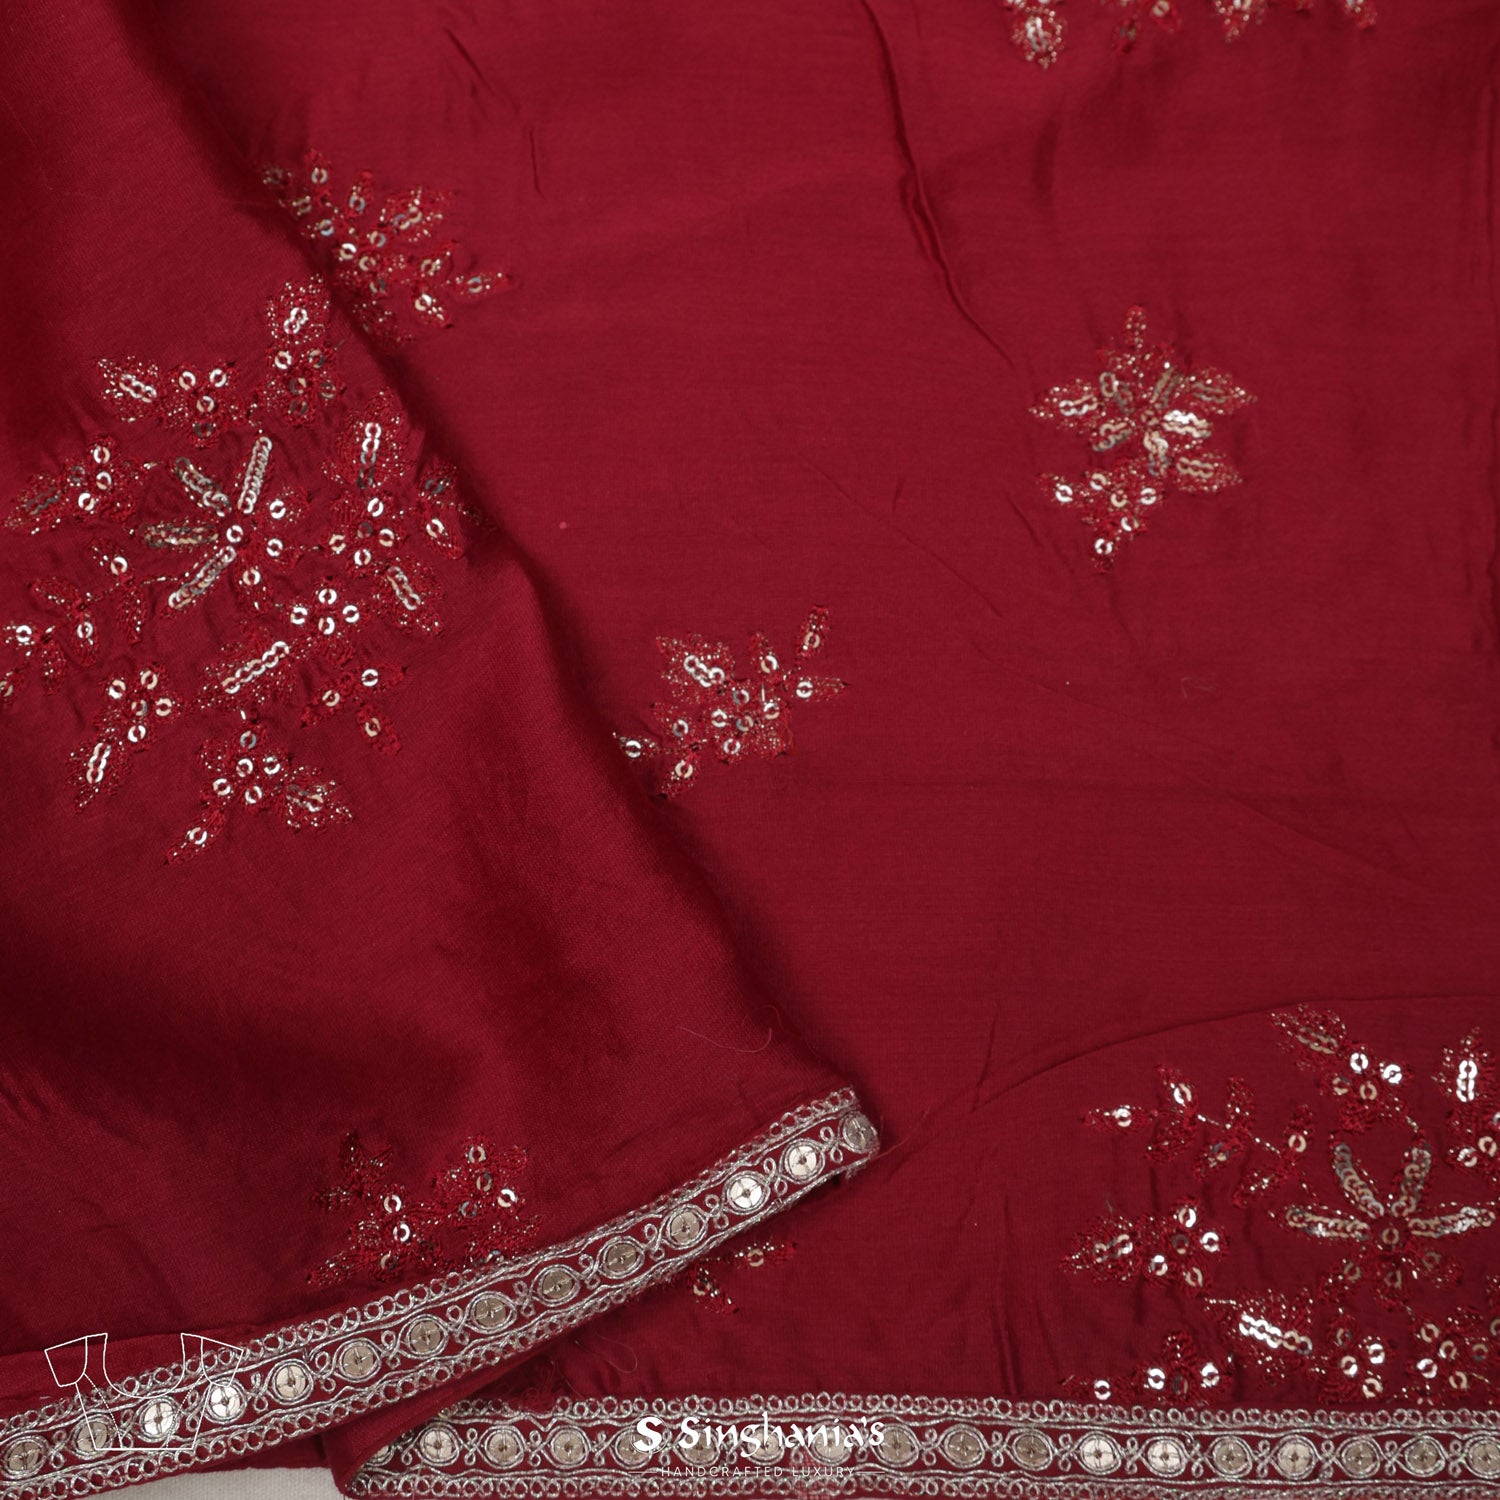 Crimson Red Printed Dupion Silk Saree With Mythlogical Pattern